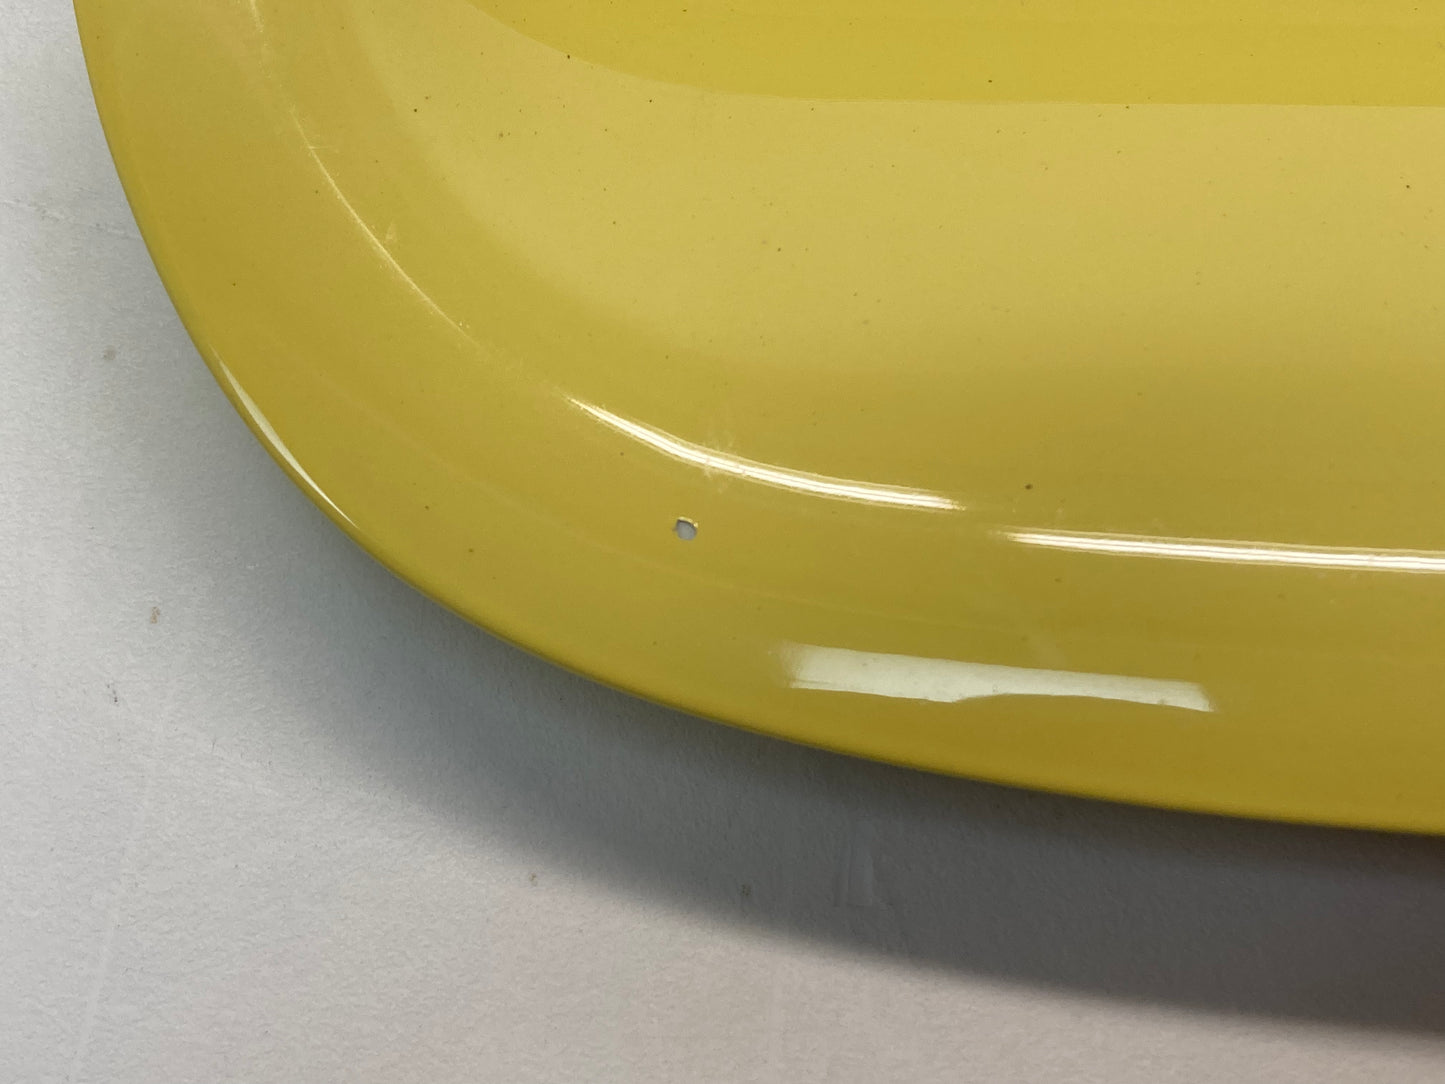 Mini Cooper S Hood Scoop Liquid Yellow - Bad Tabs 51137123430 02-08 R52 R53 340